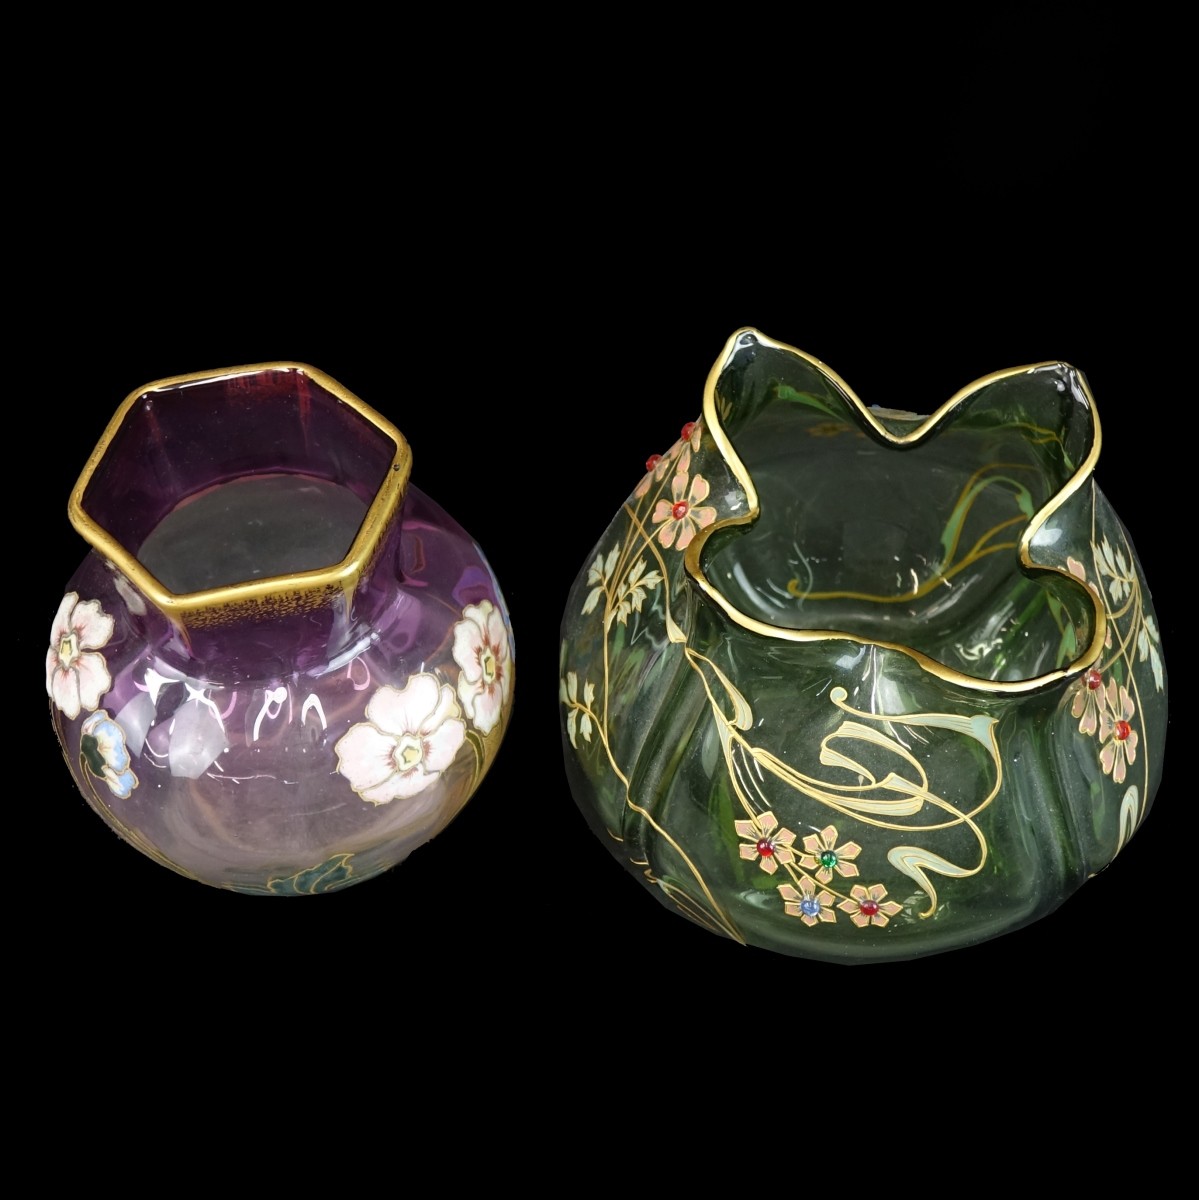 Mount Joy Art Glass Vases